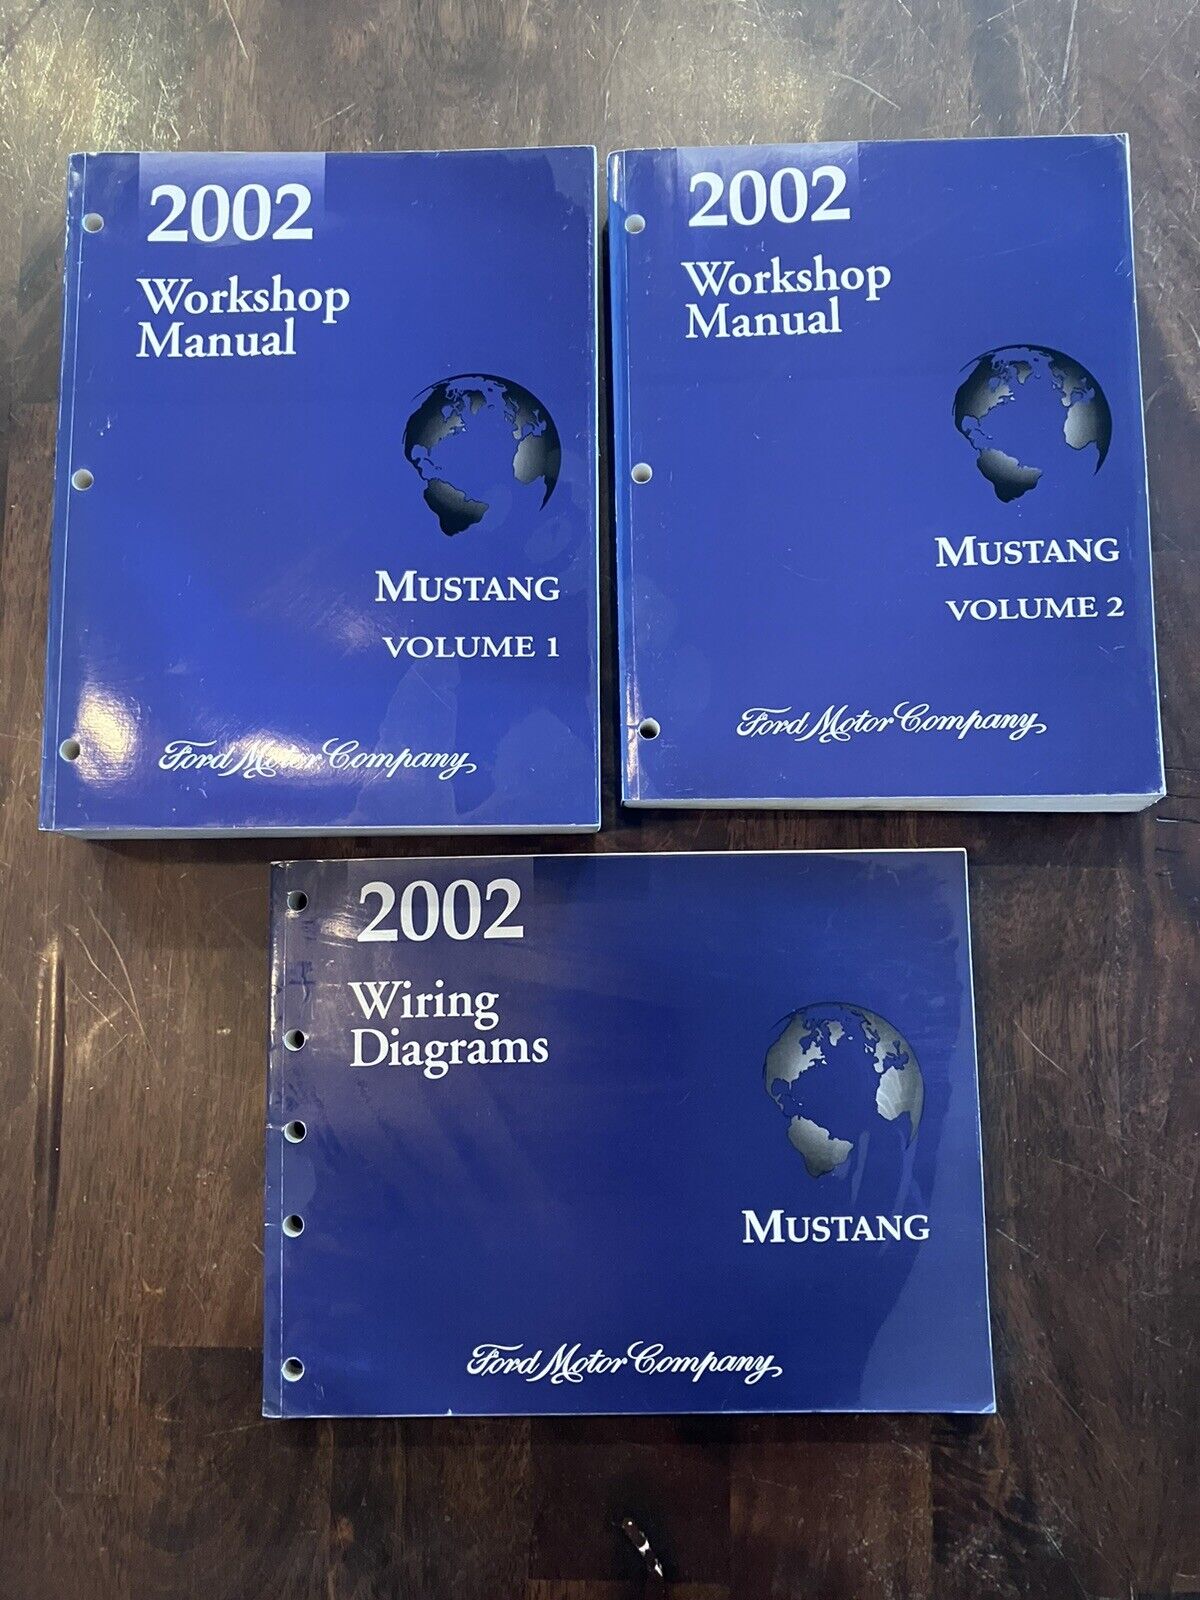 2002 Ford Mustang Workshop Factory manual set Volumes 1 & 2 + Wiring Diagrams